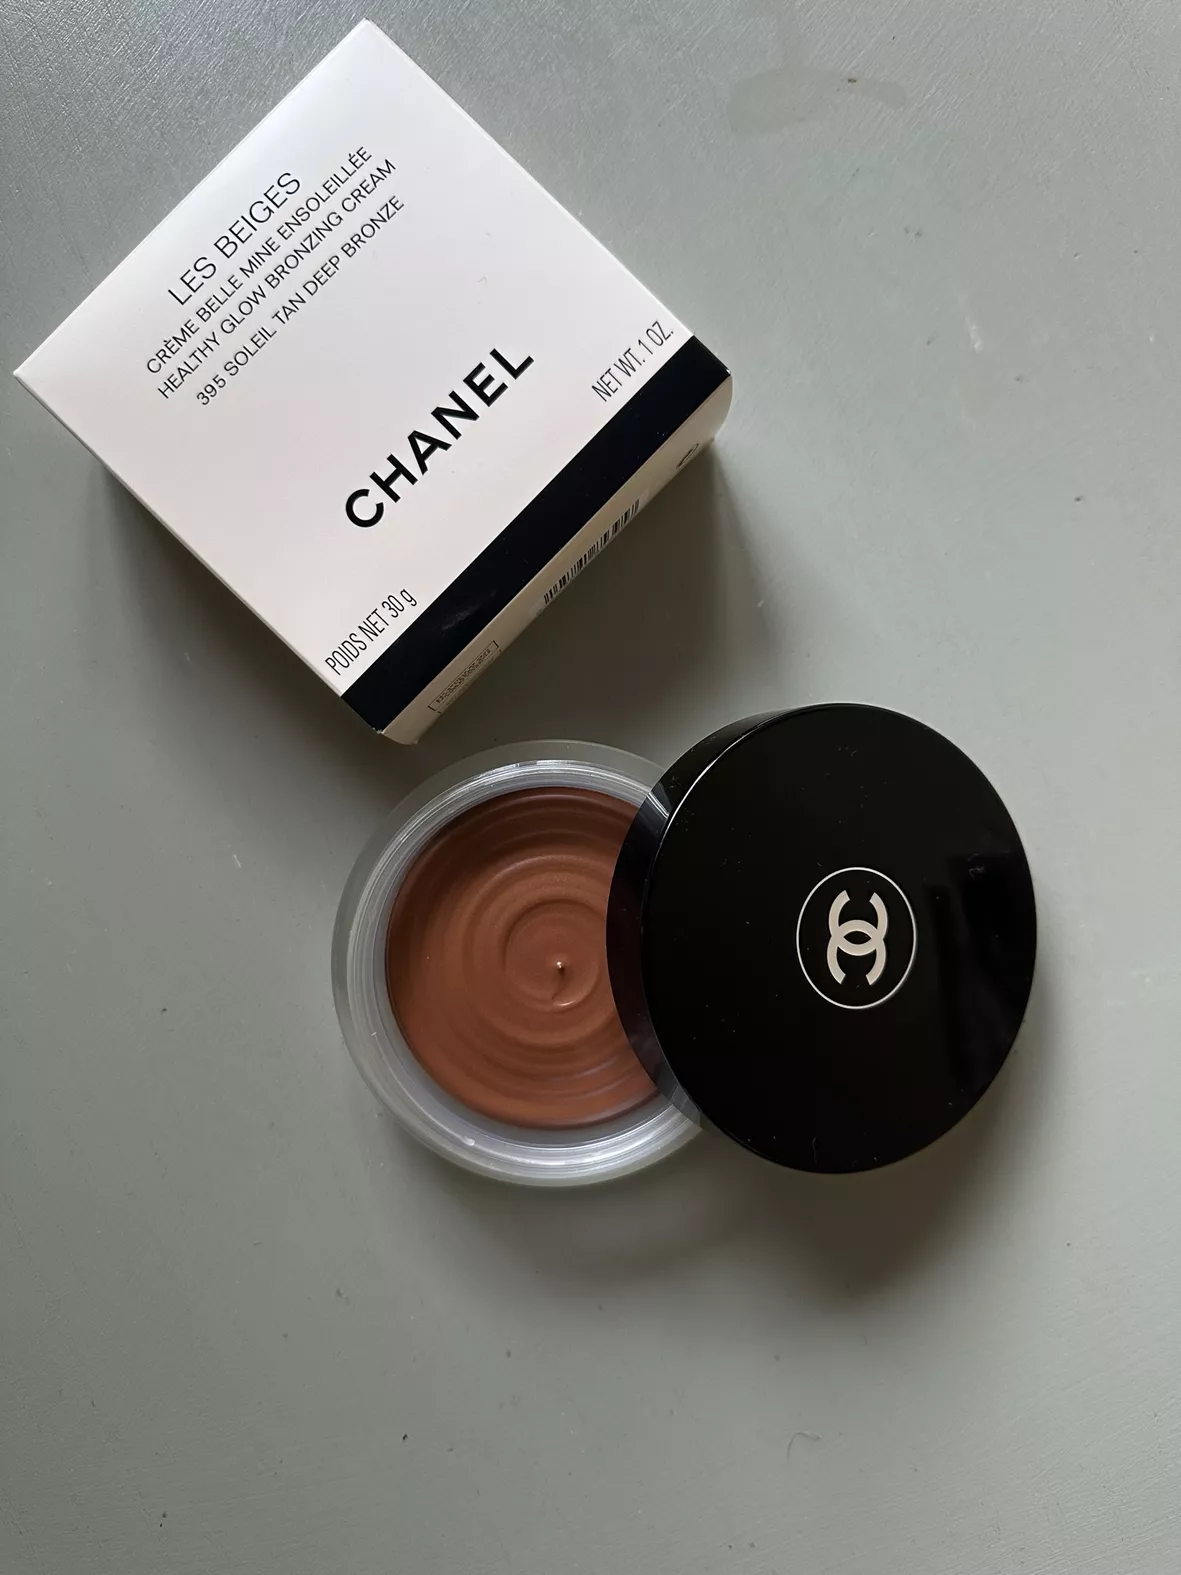 Chanel Les Beiges Healthy Glow Bronzing Cream 395 Soleil Tan Deep